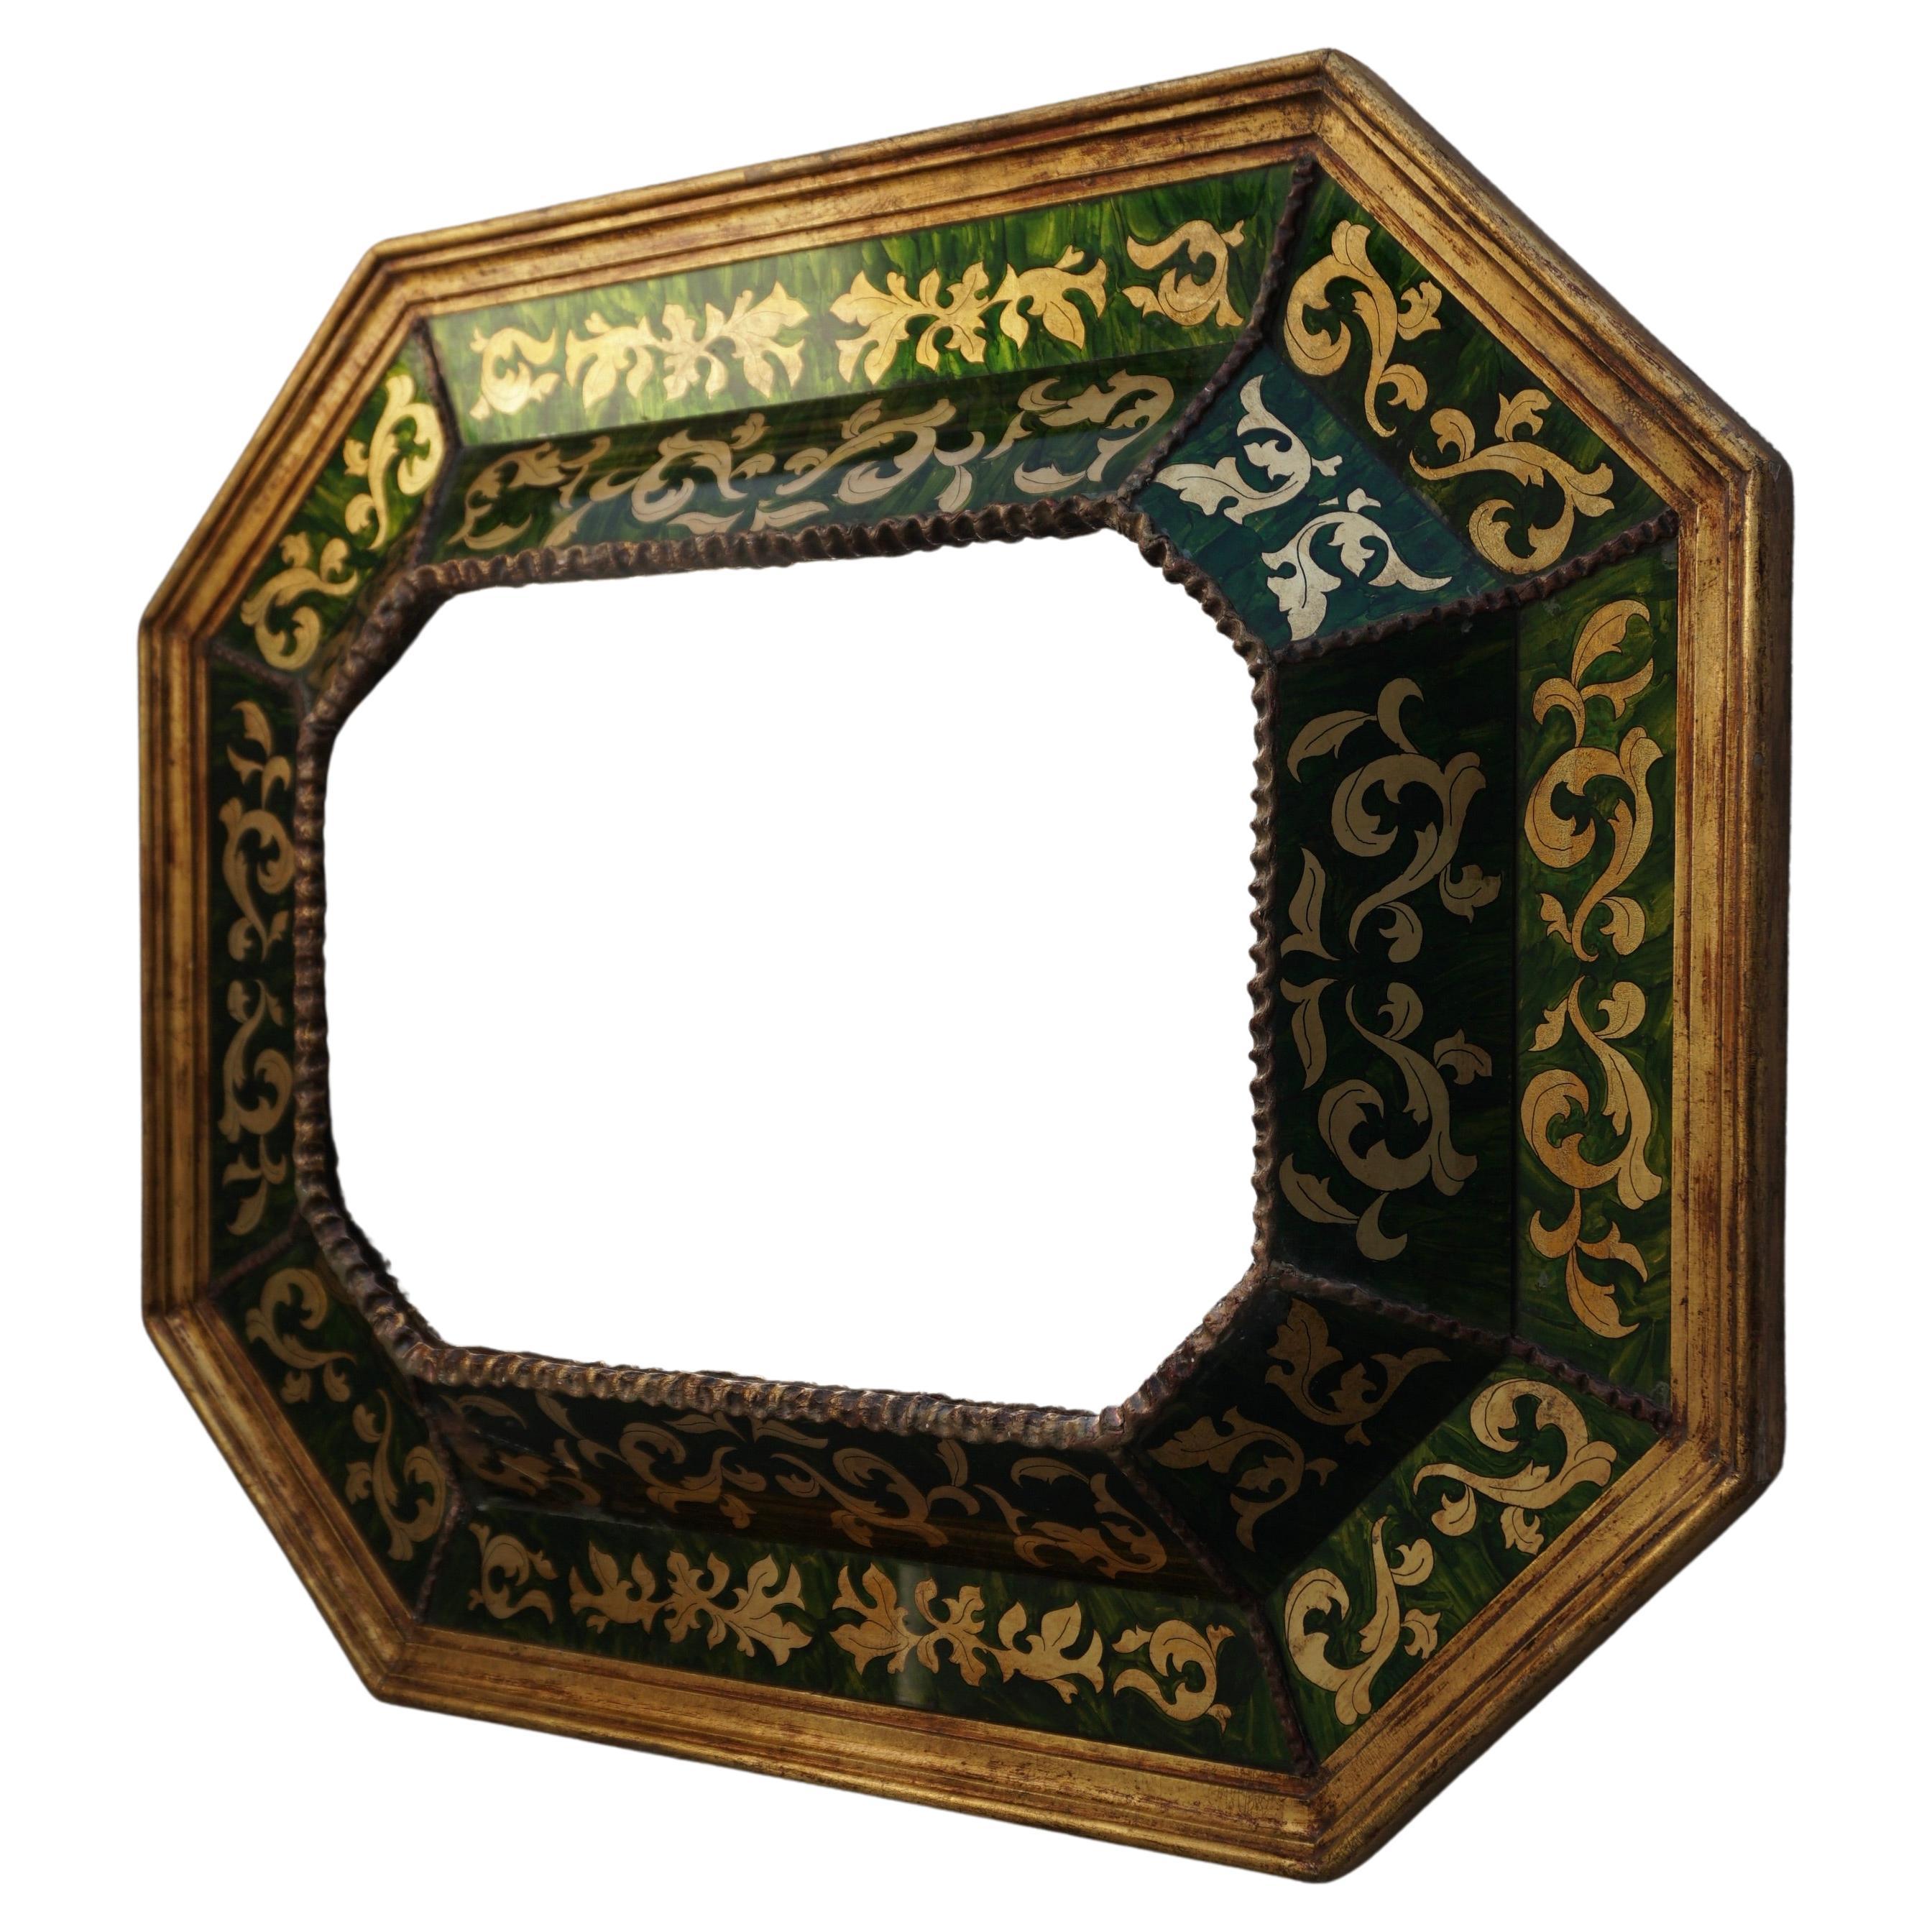 A Spanish verre eglomise gilded mirror c. 1930

Dimensions
63 cm h x 79 cm w 7 cm d
